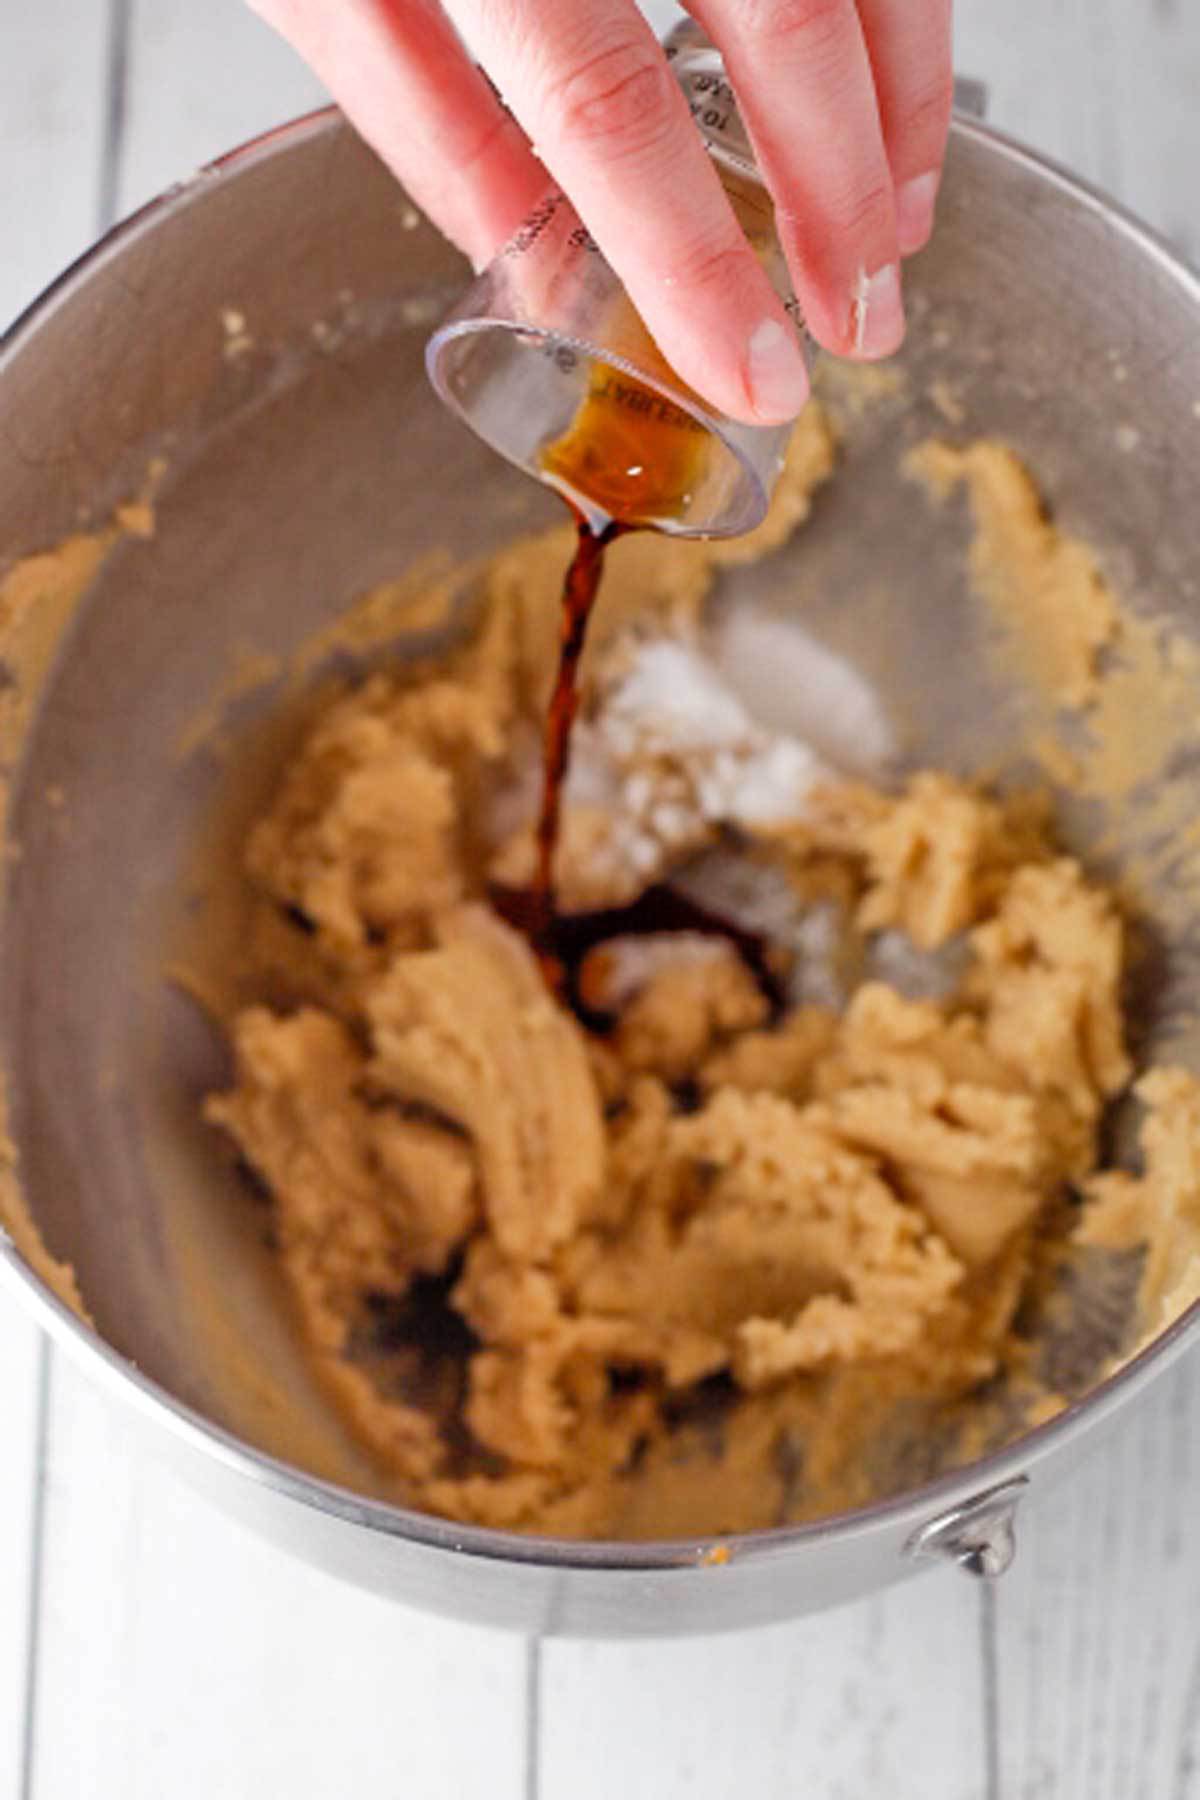 Chocolate blossom cookies process 2 add vanilla, salt, baking powder.